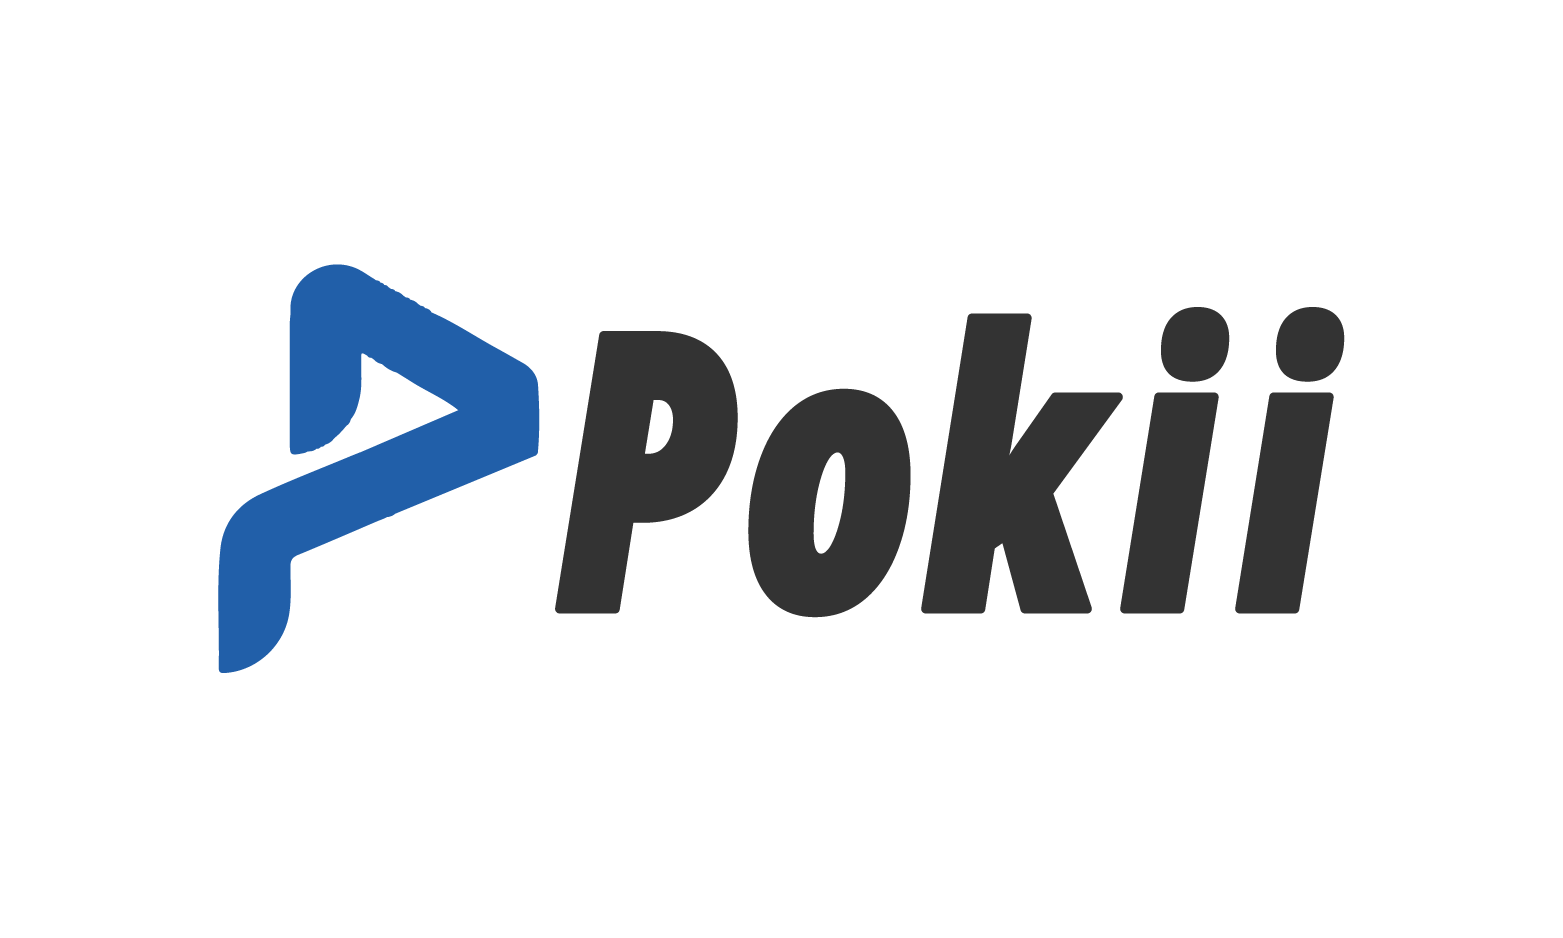 Pokii.com - Creative brandable domain for sale